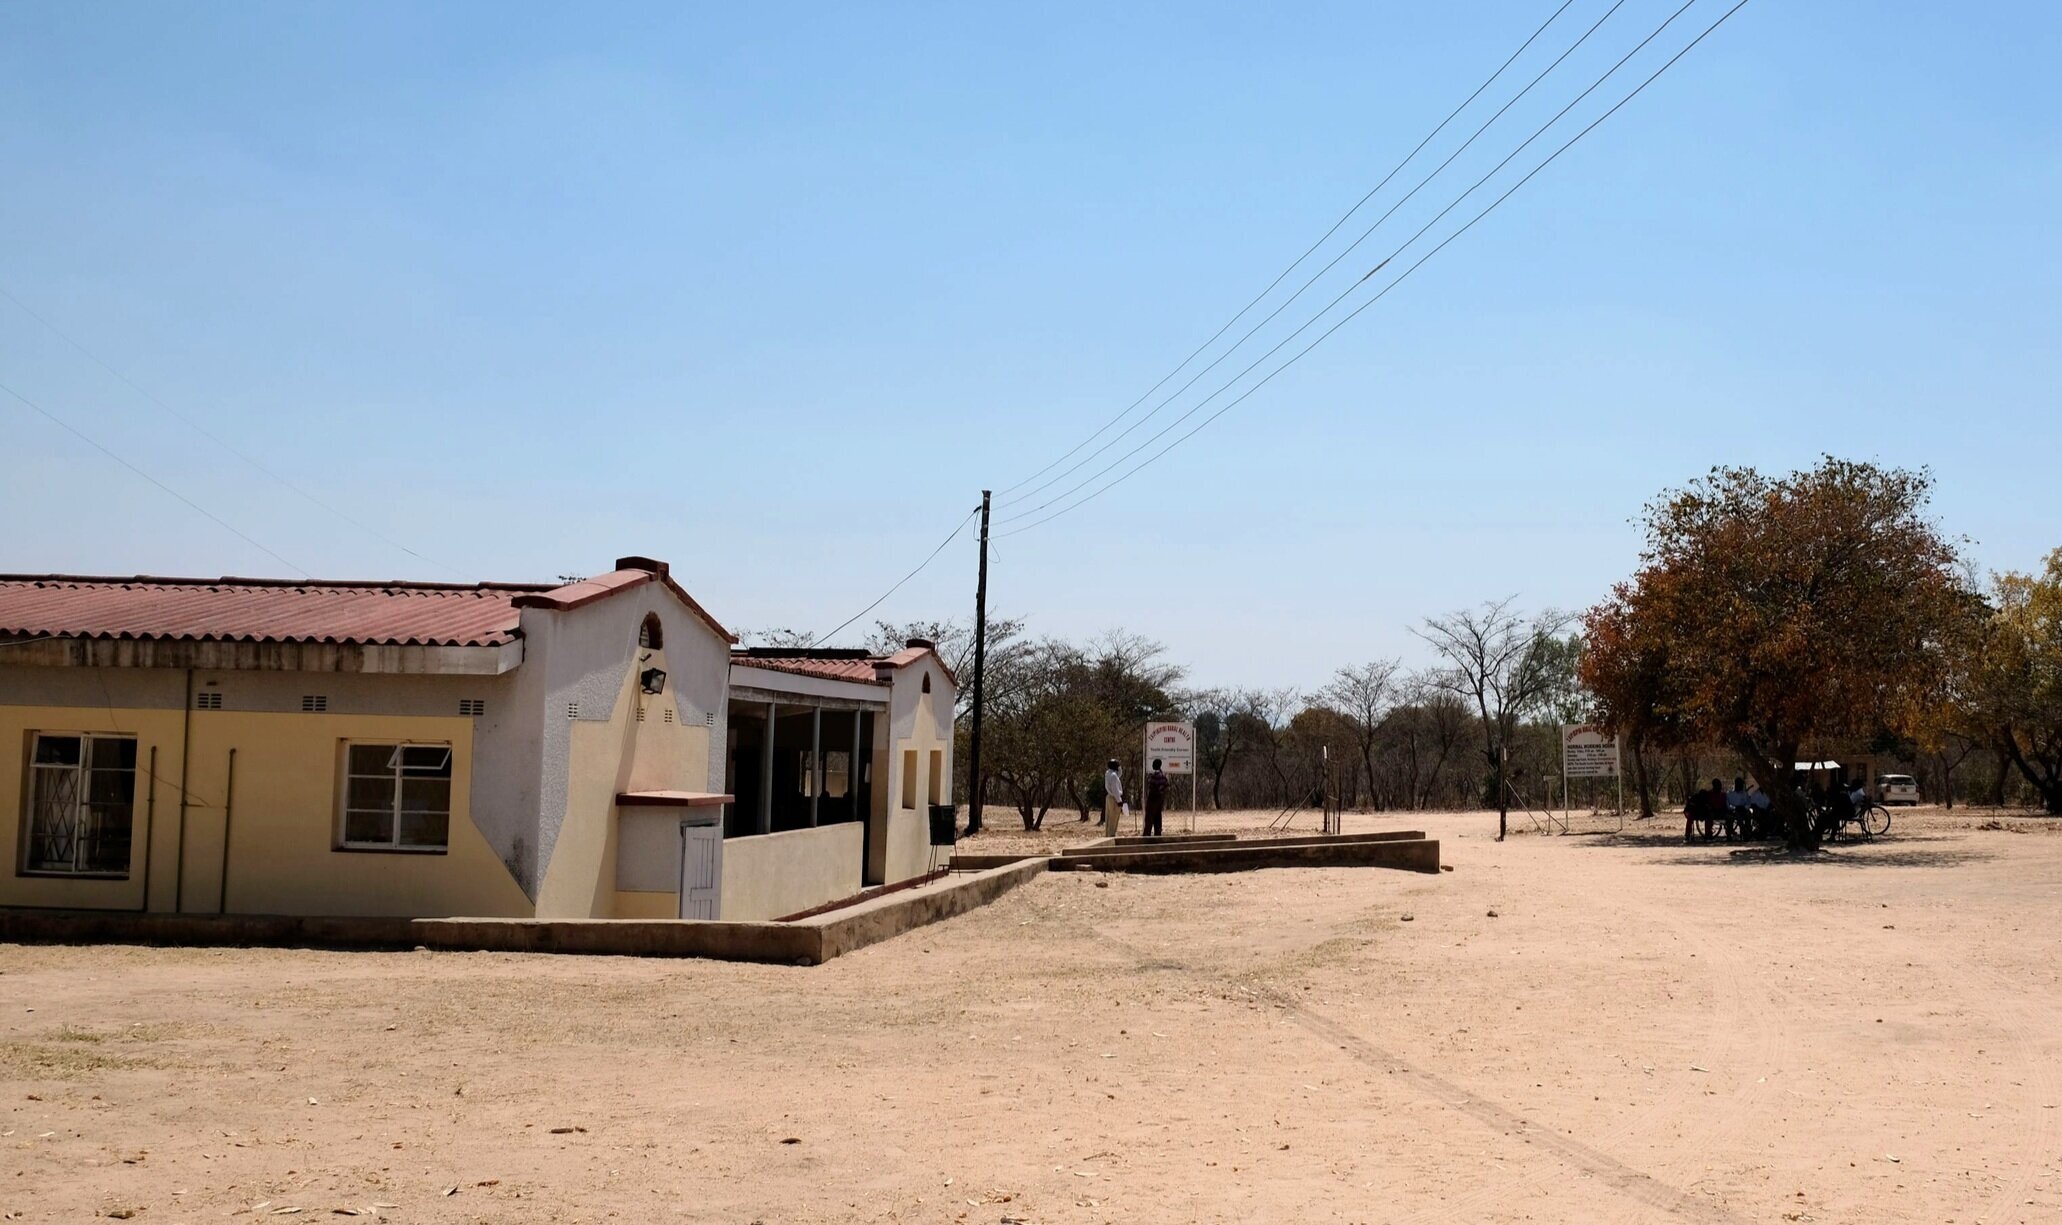 Case Study: Zimbabwe MoH, Demand for Immunization — The Nucleus Group